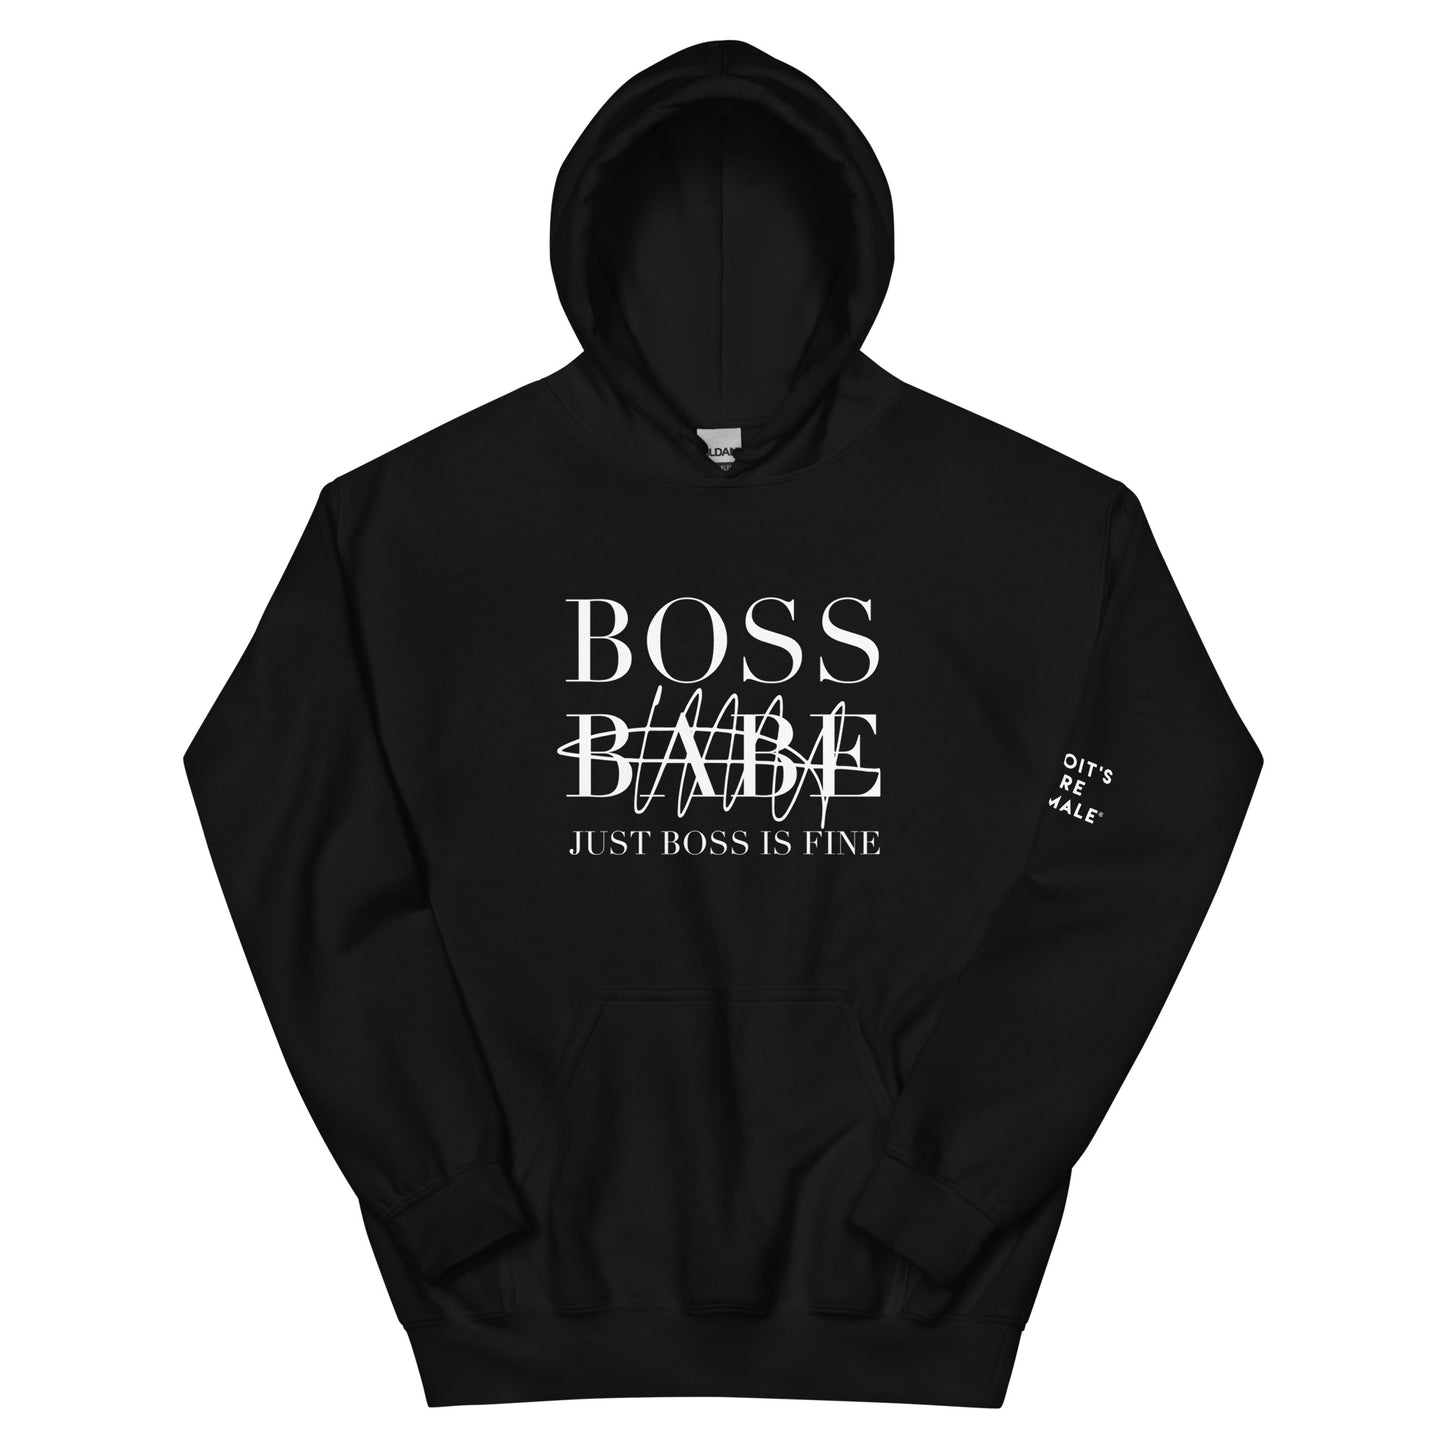 'Just Boss is Fine' Unisex Hoodie